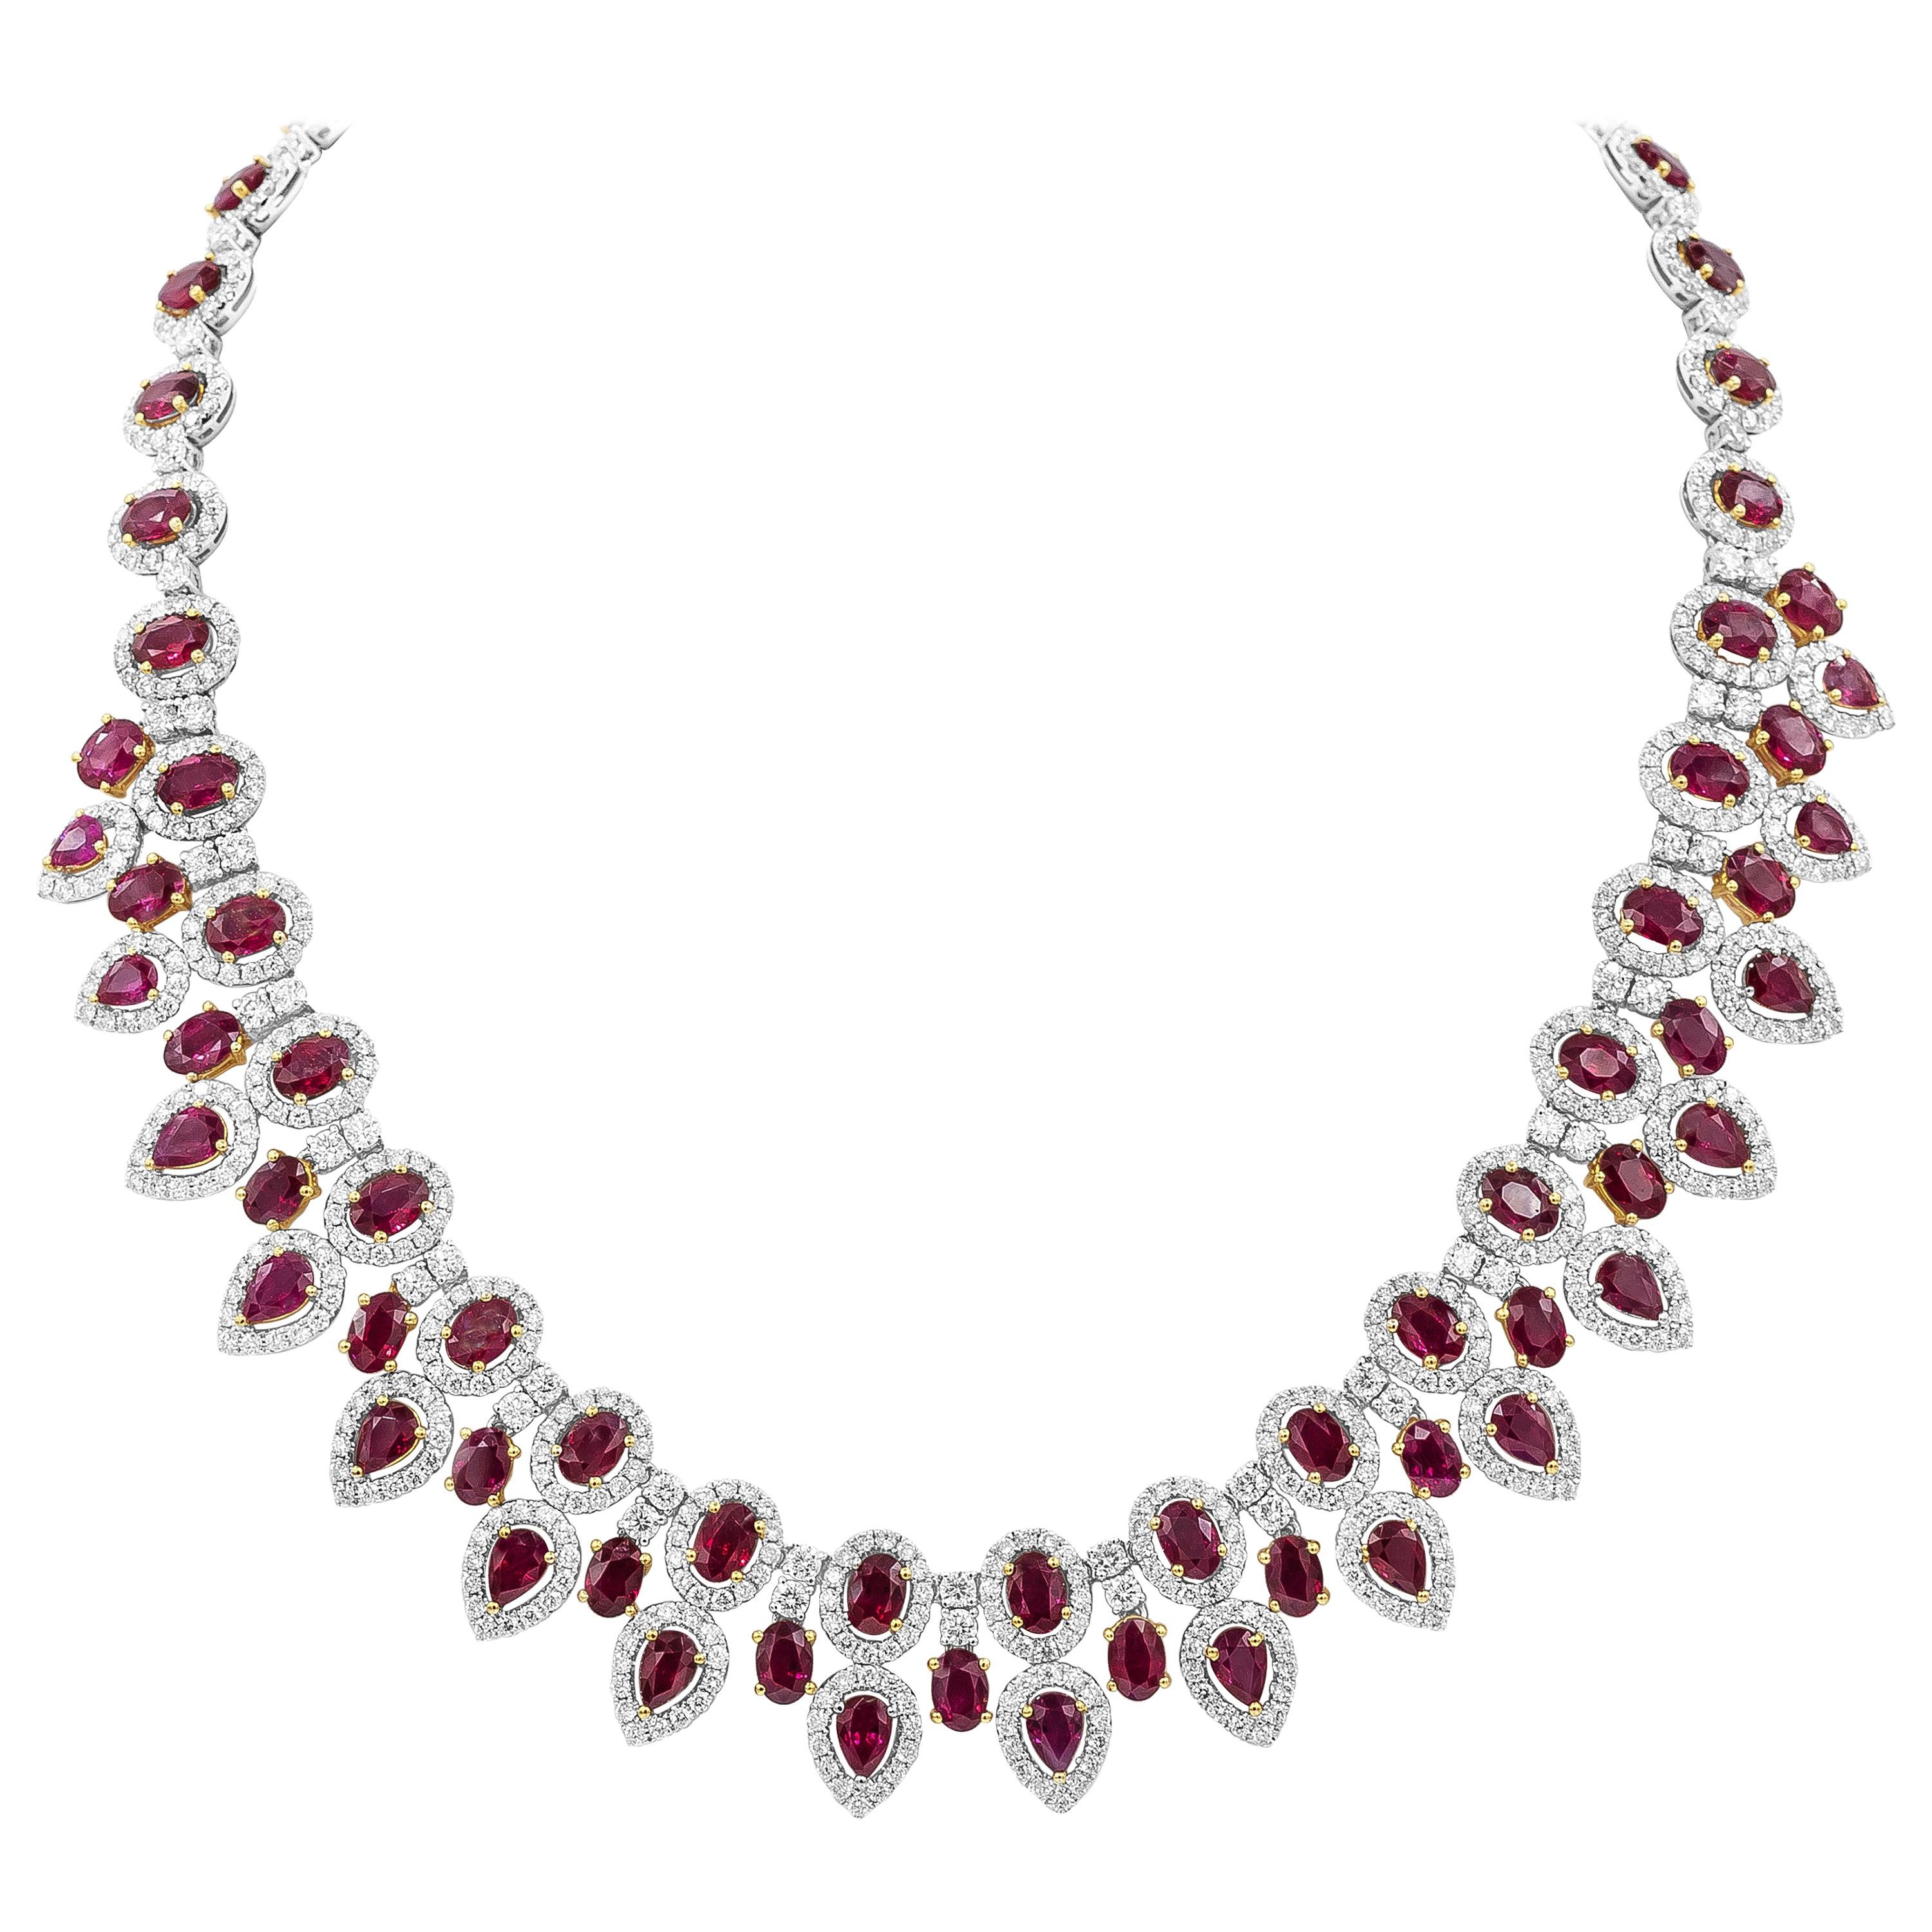 Roman Malakov, GIA Certified 38.92 Carat Burmese Ruby with Diamond Halo Necklace For Sale